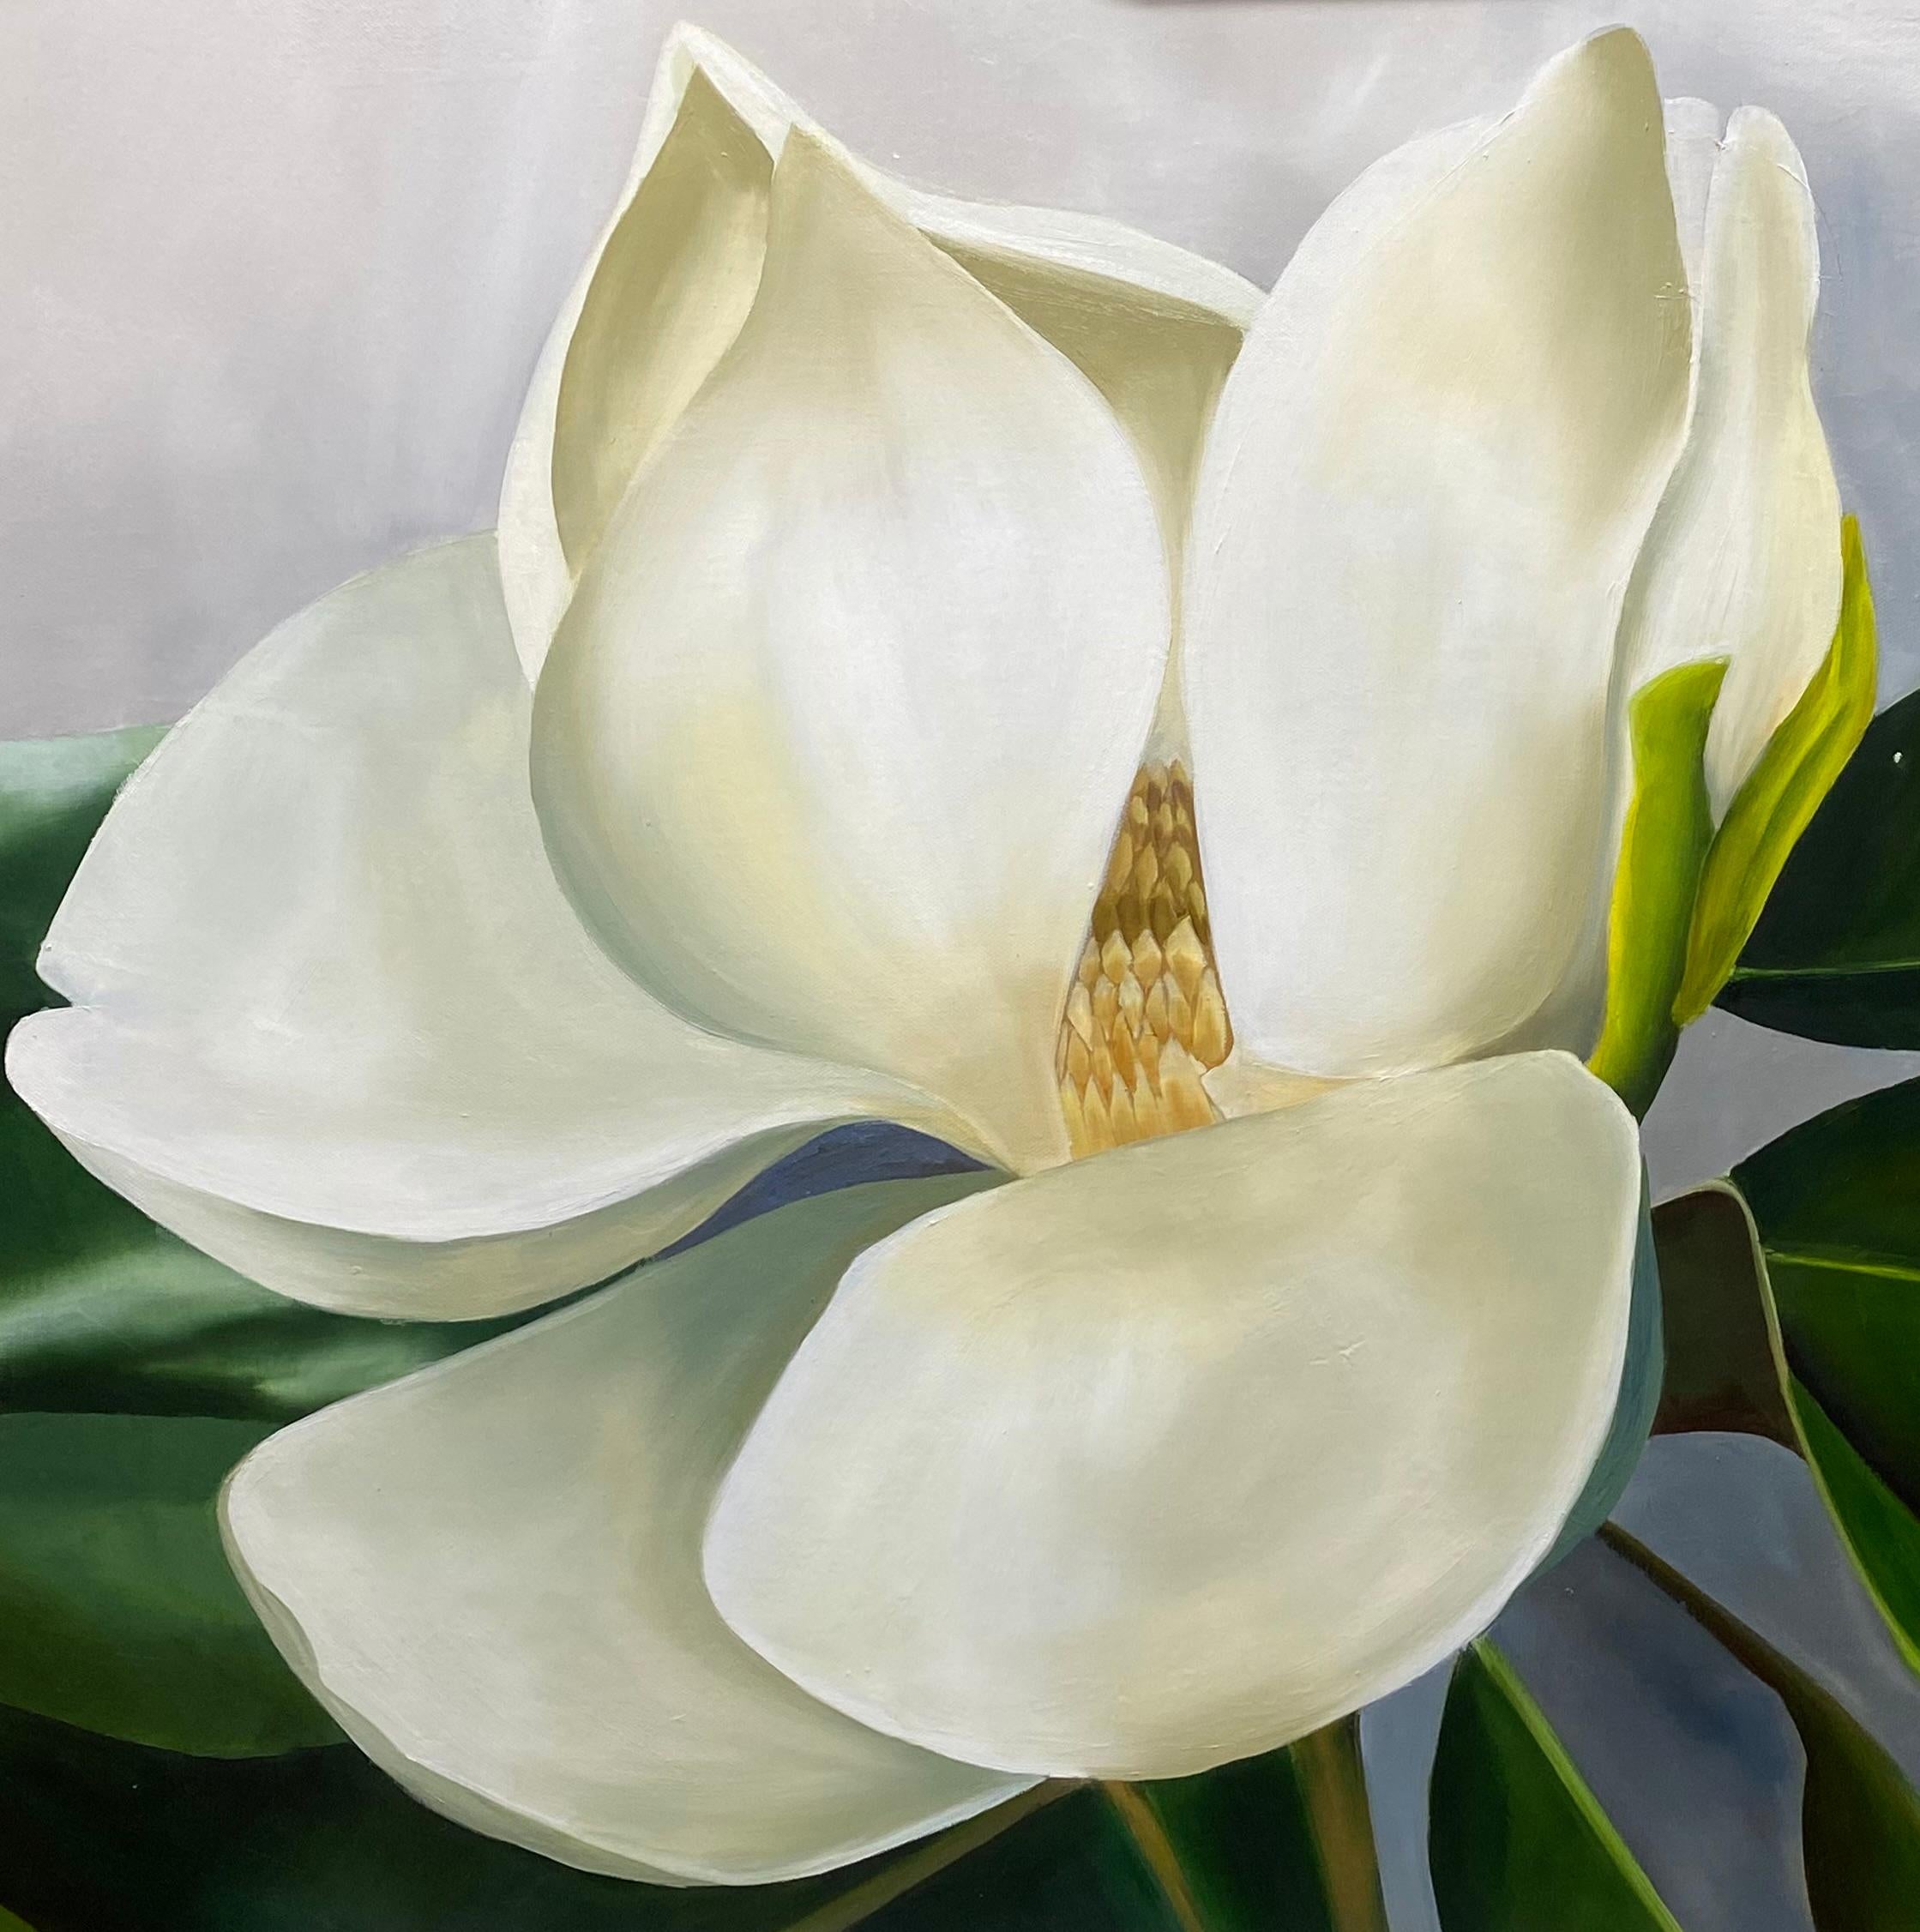 americana egg magnolia paint